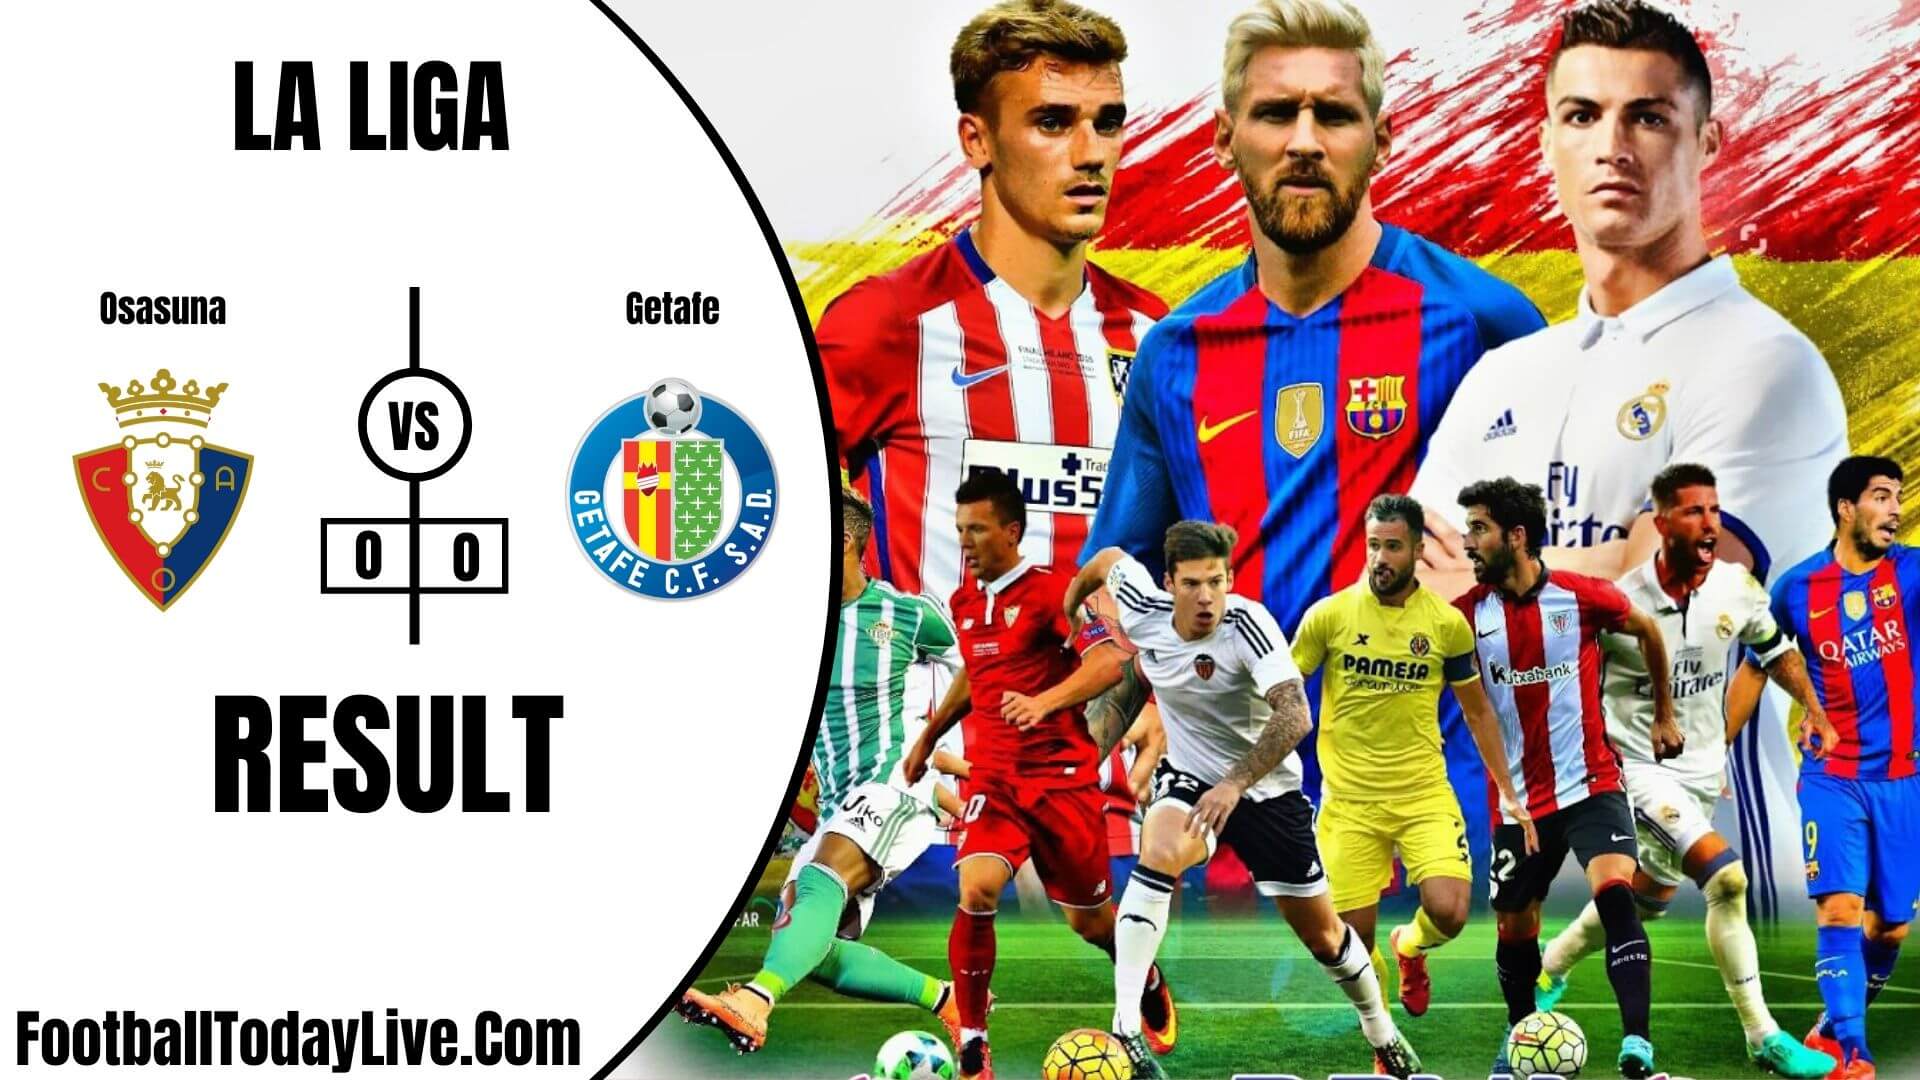 Osasuna Vs Getafe | La Liga Week 34 Result 2020